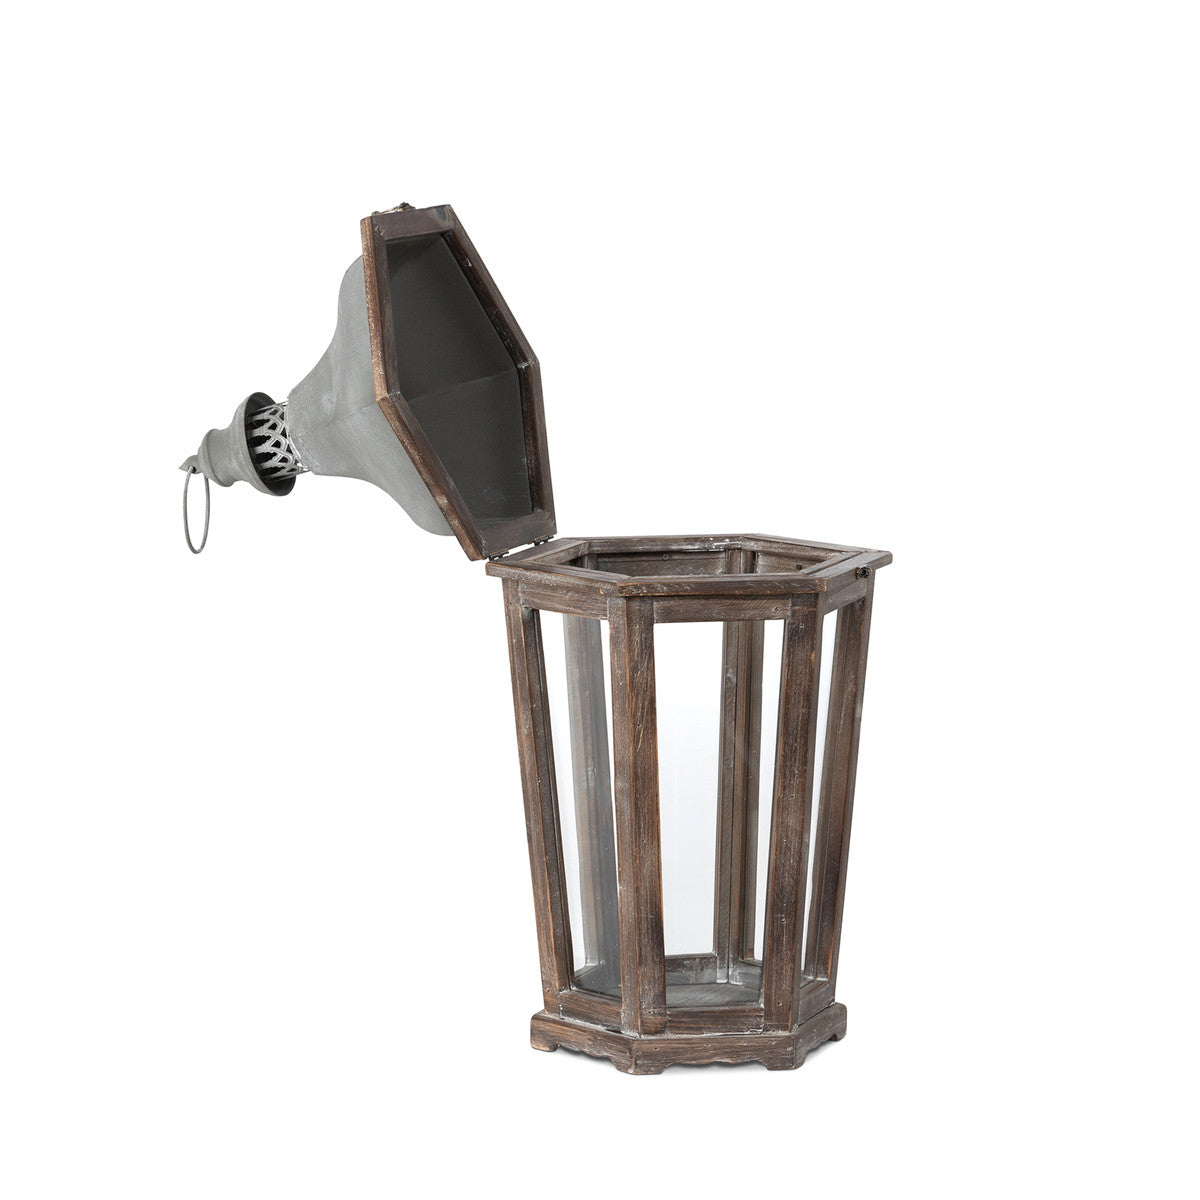 Wood & Galvanized Metal Lantern - Medium